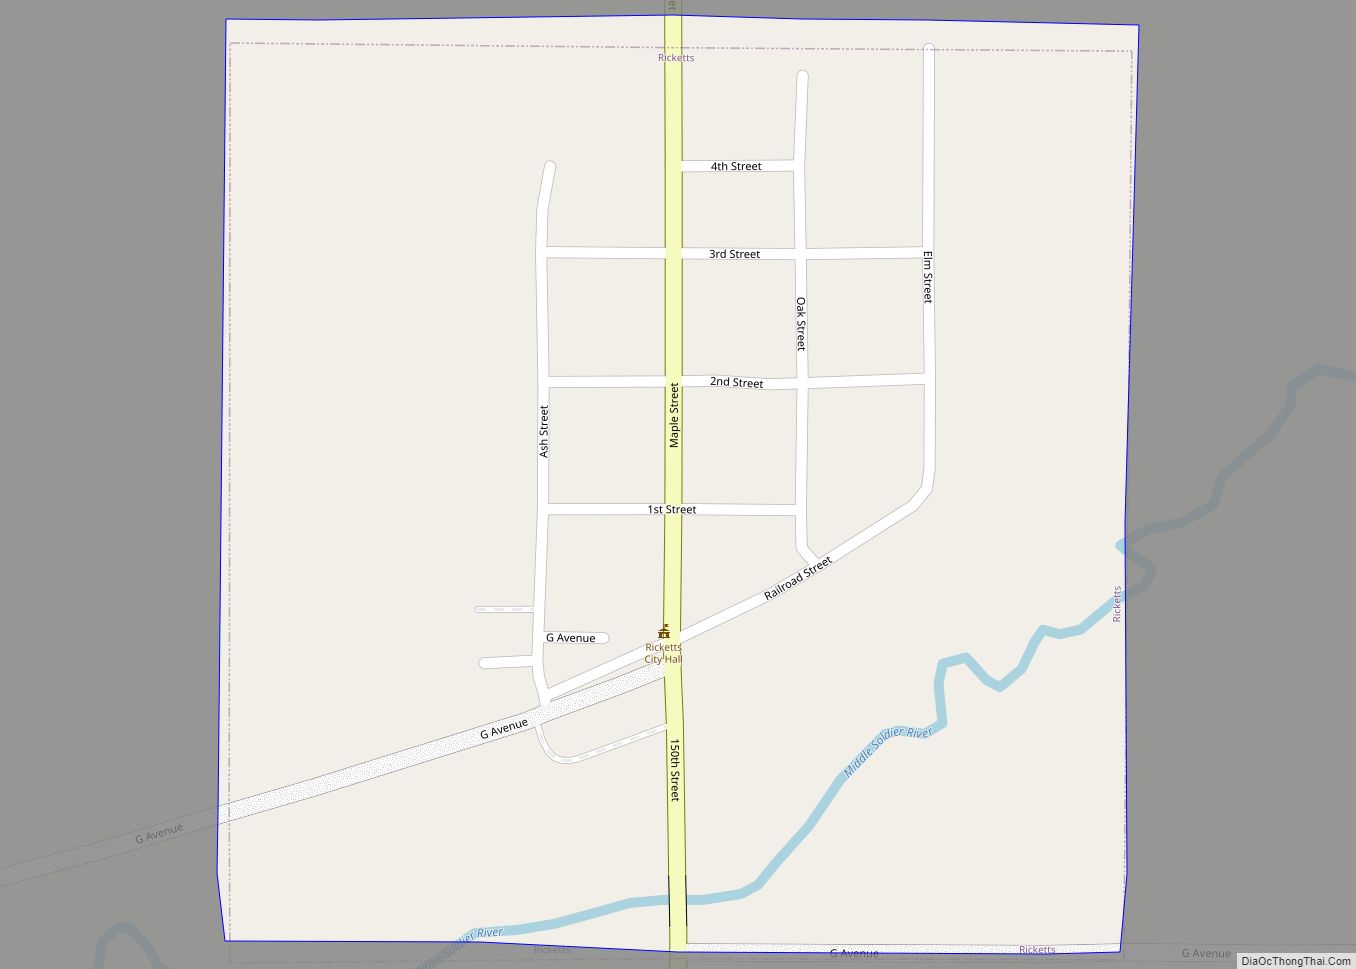 Map of Ricketts city